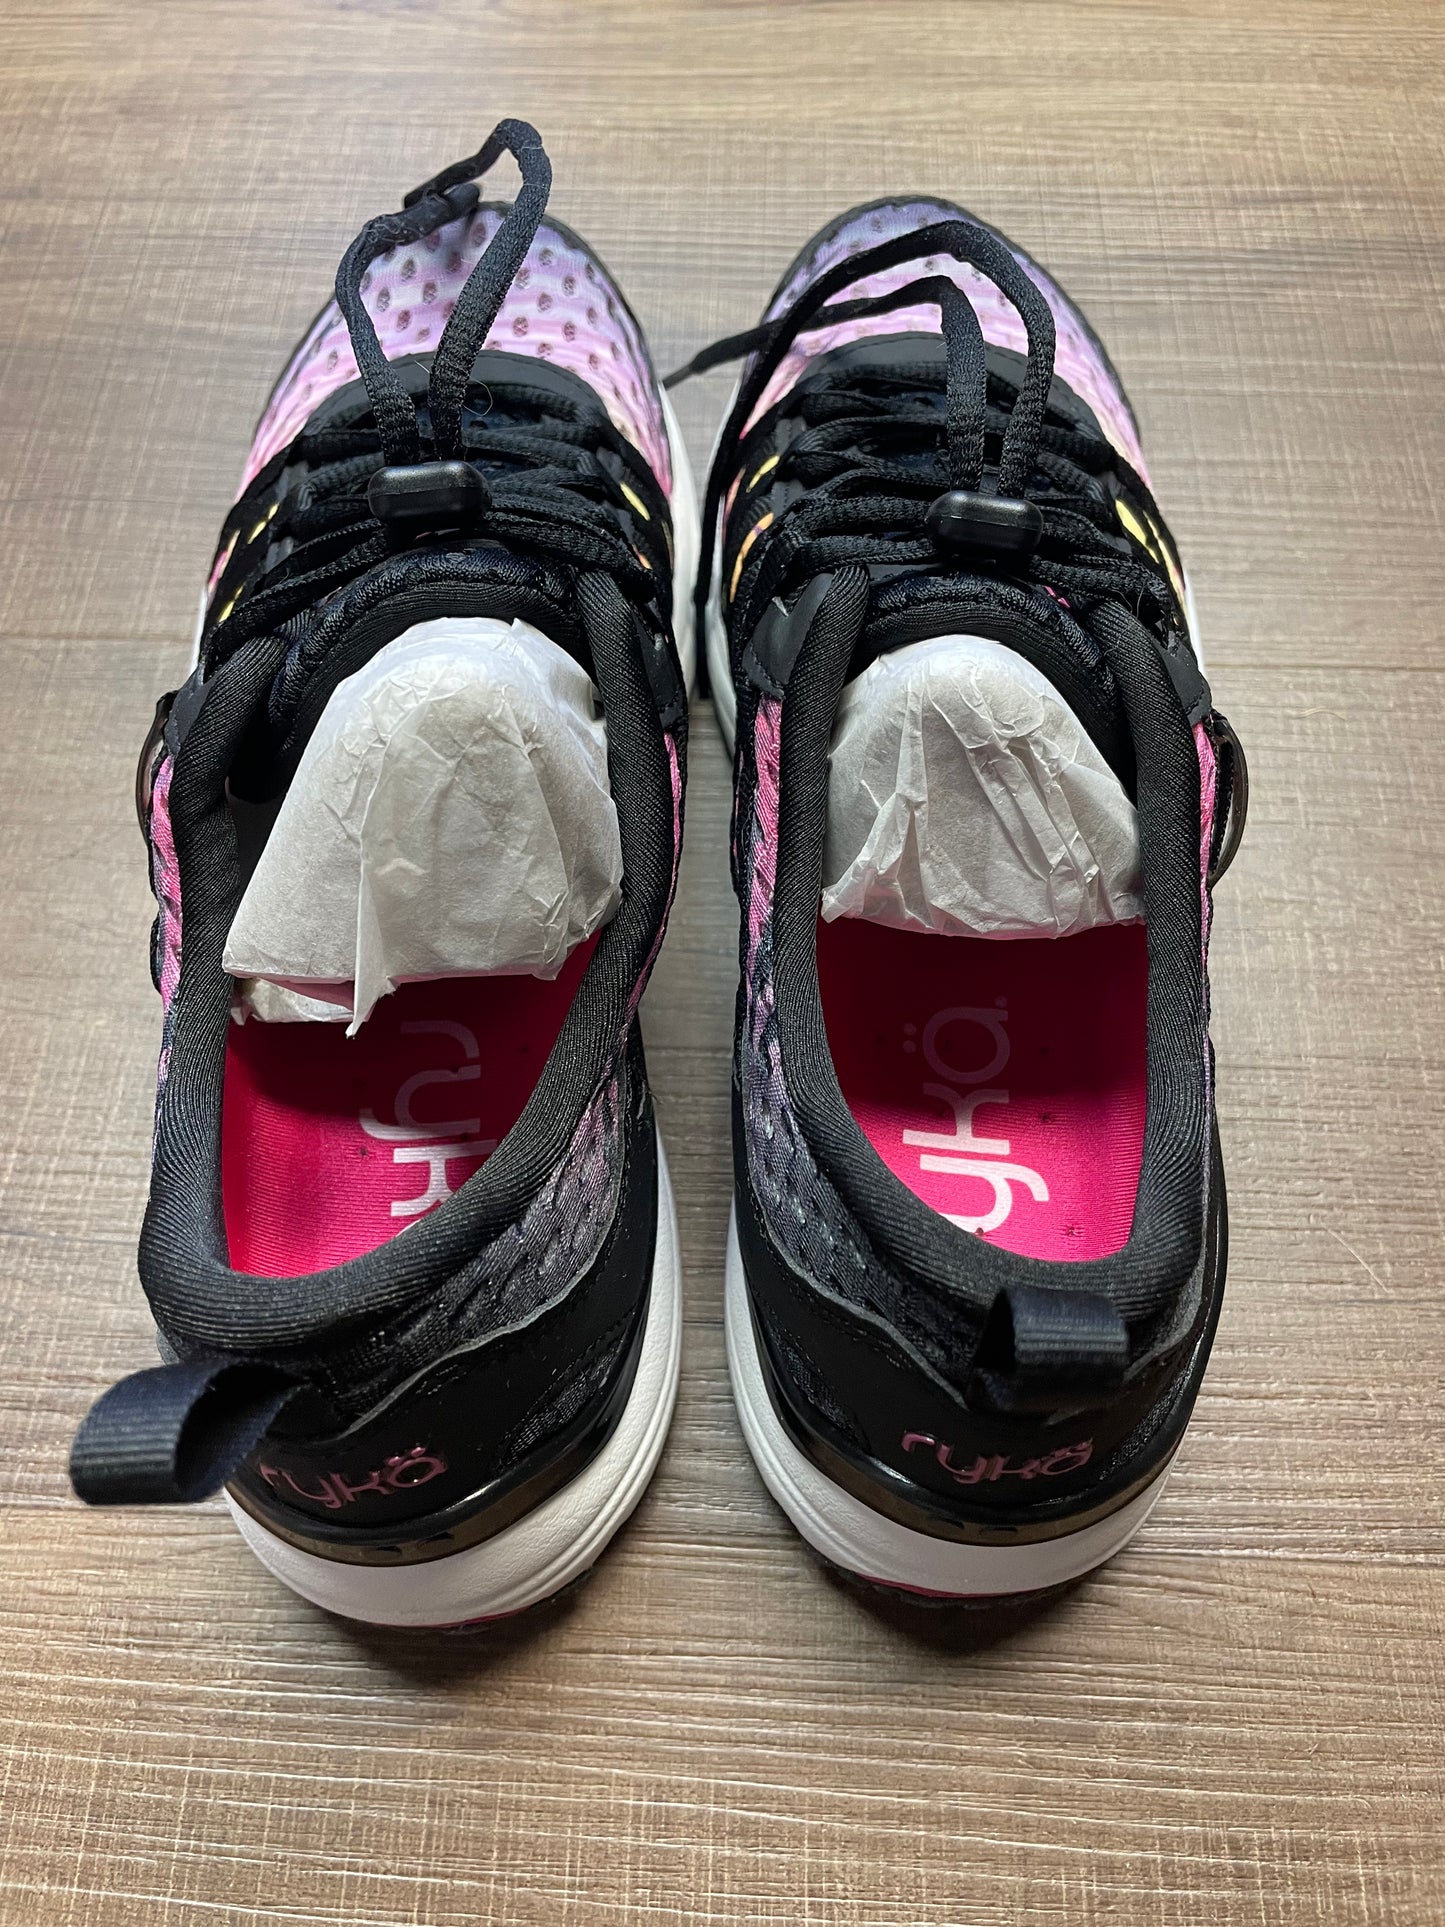 Ryka Women's Hydro Sport Training Shoe (8.5M)